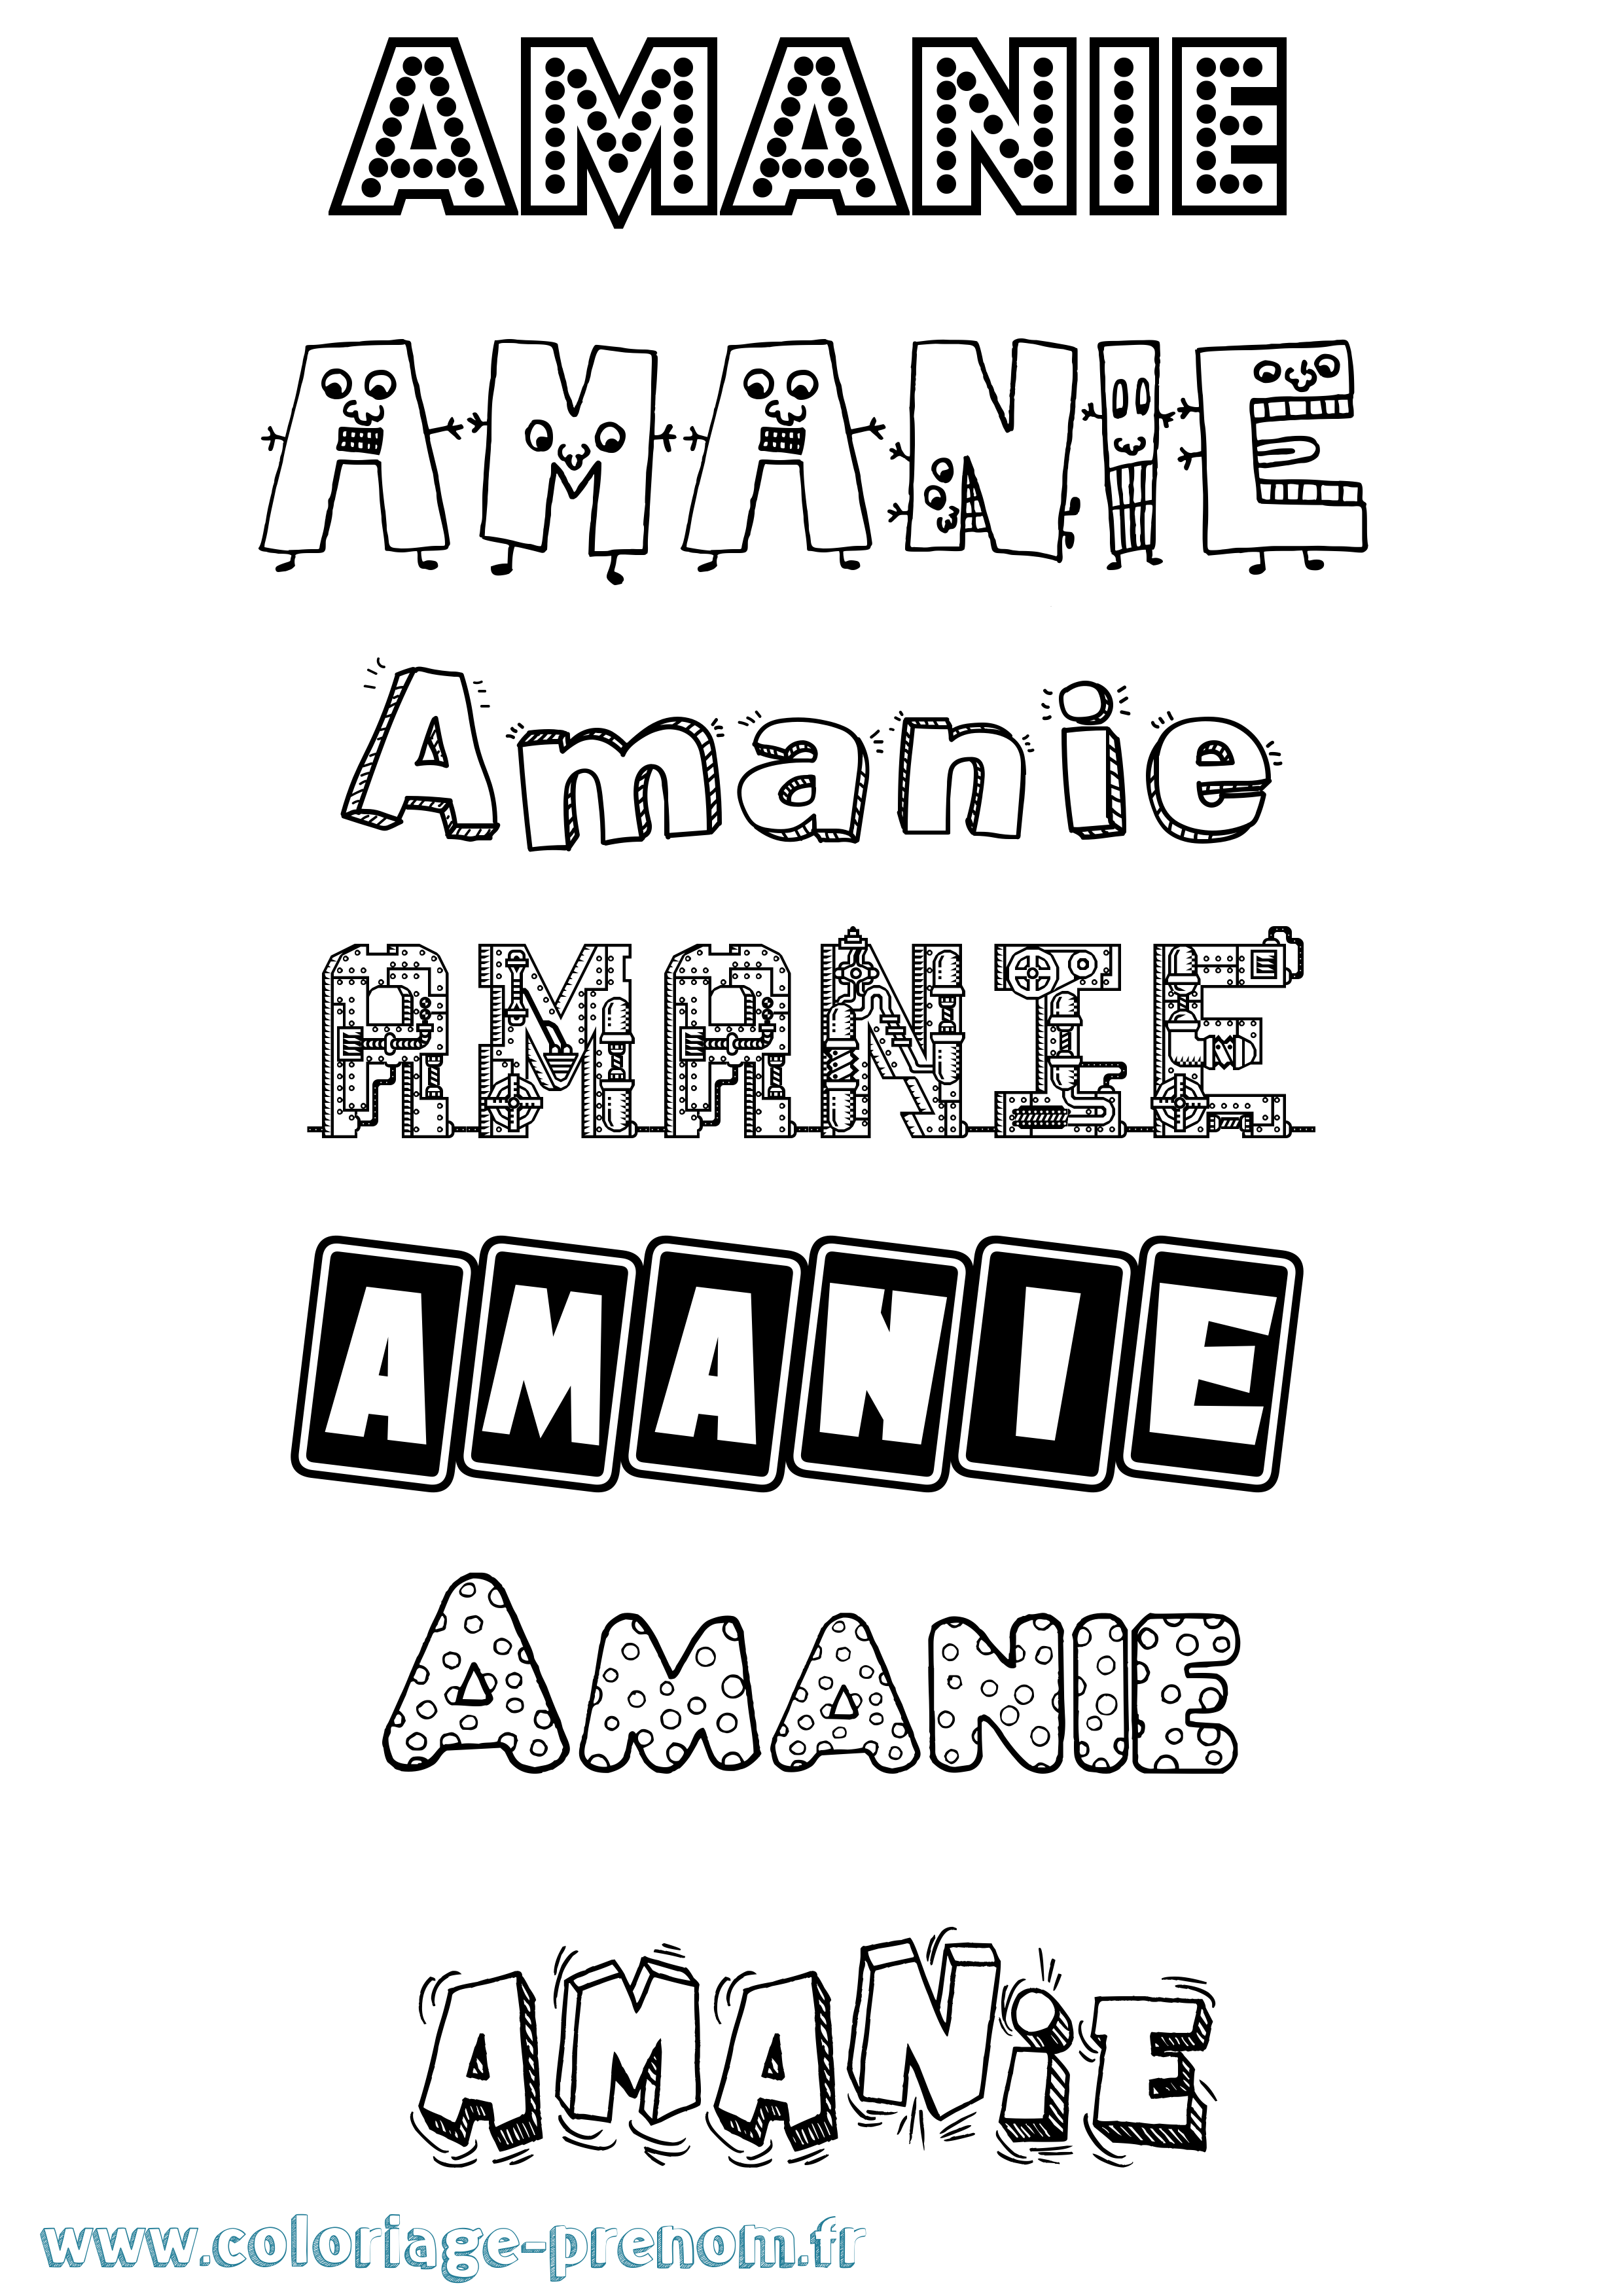 Coloriage prénom Amanie Fun